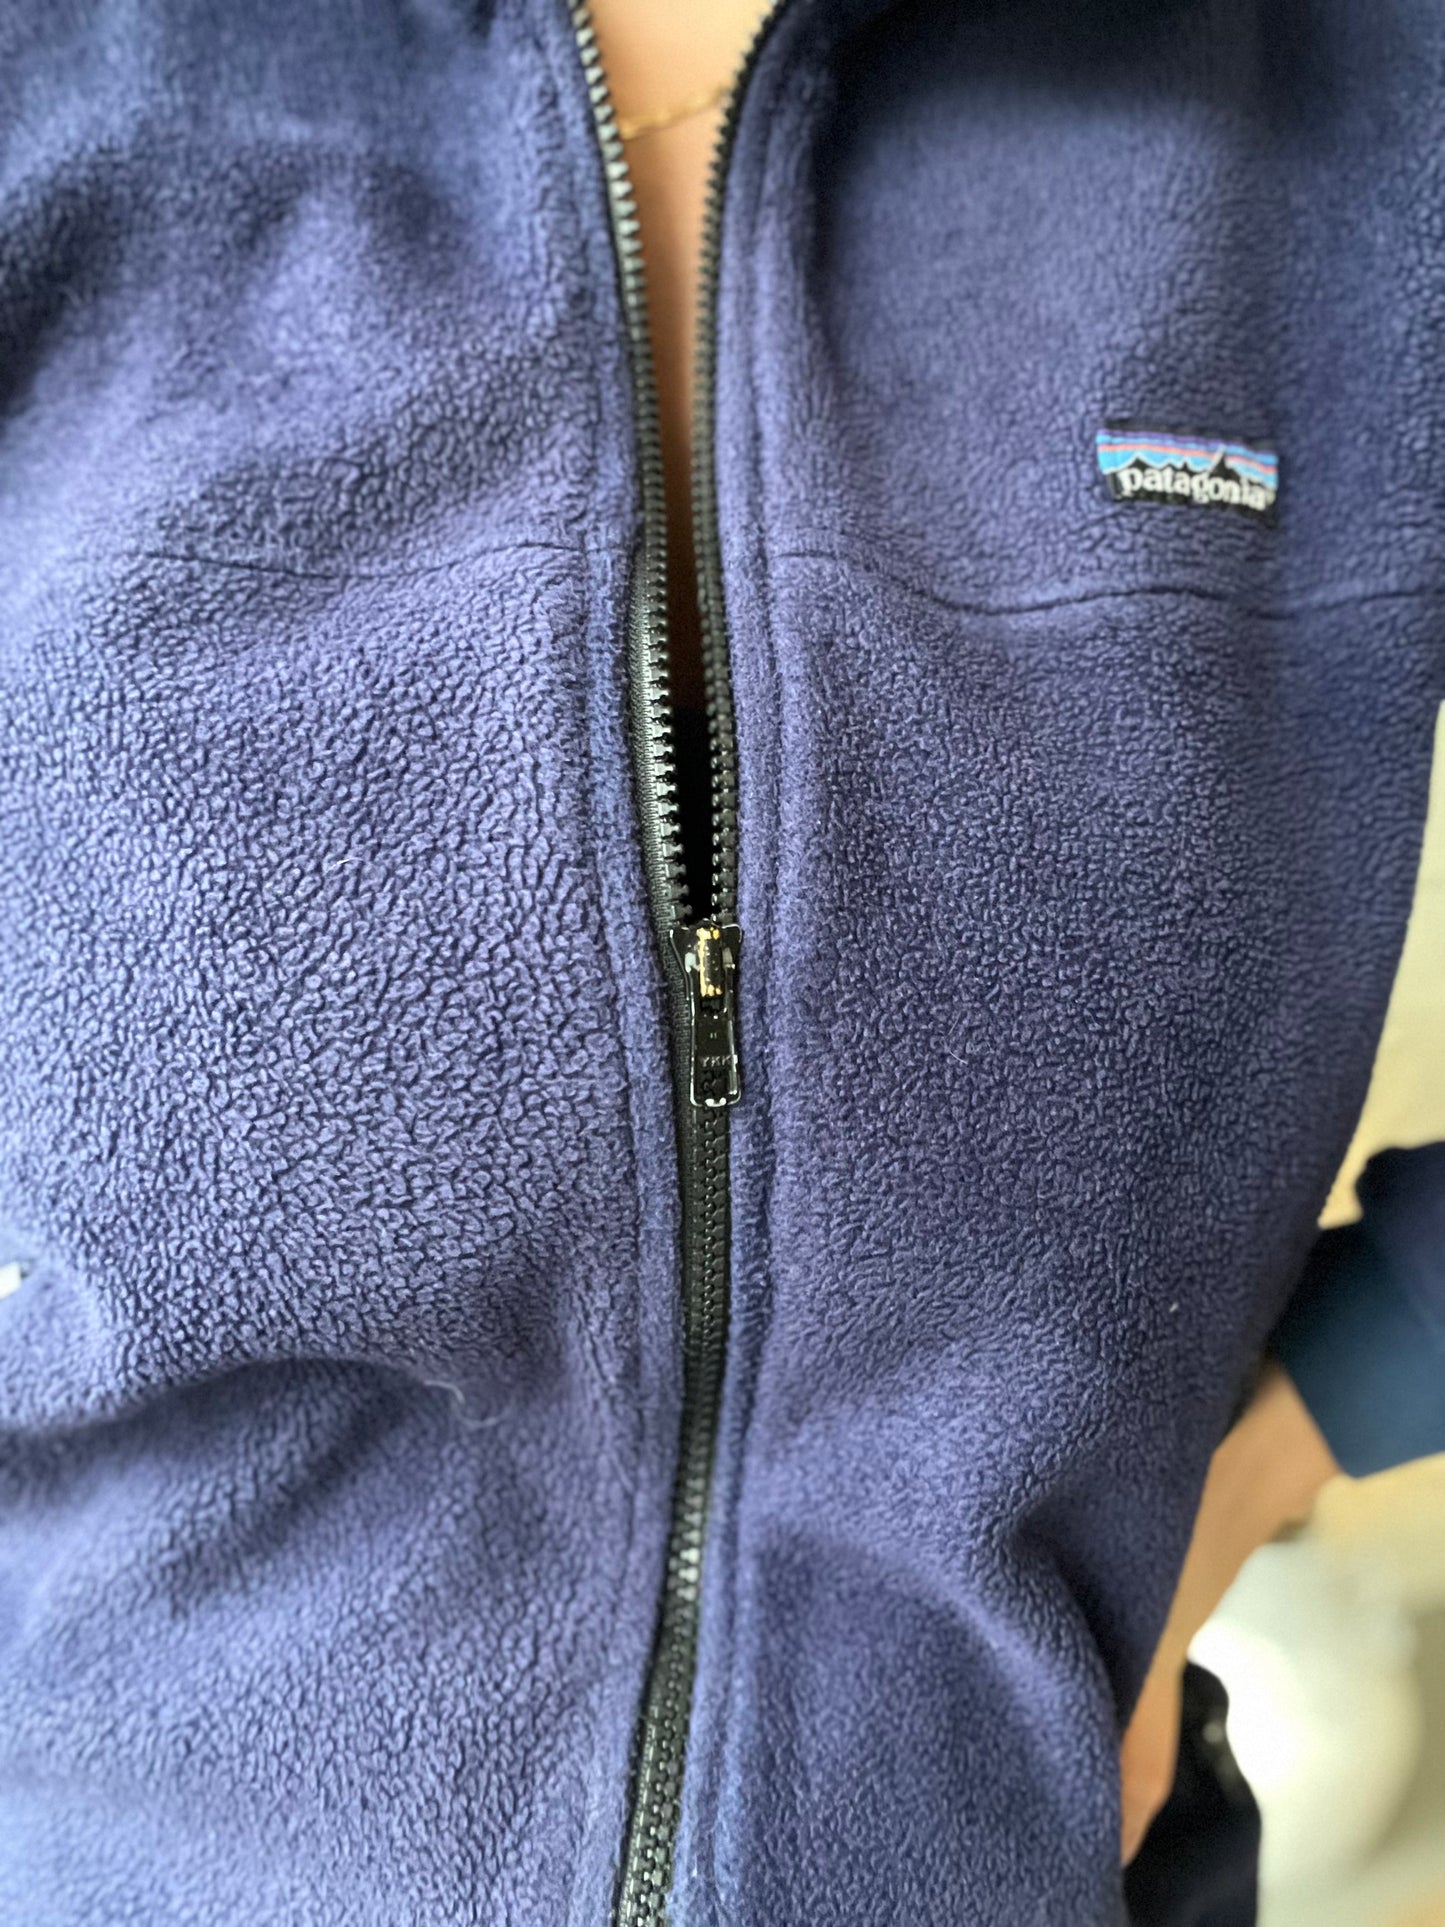 Vintage Patagonia Fleece Zip - Size S/M